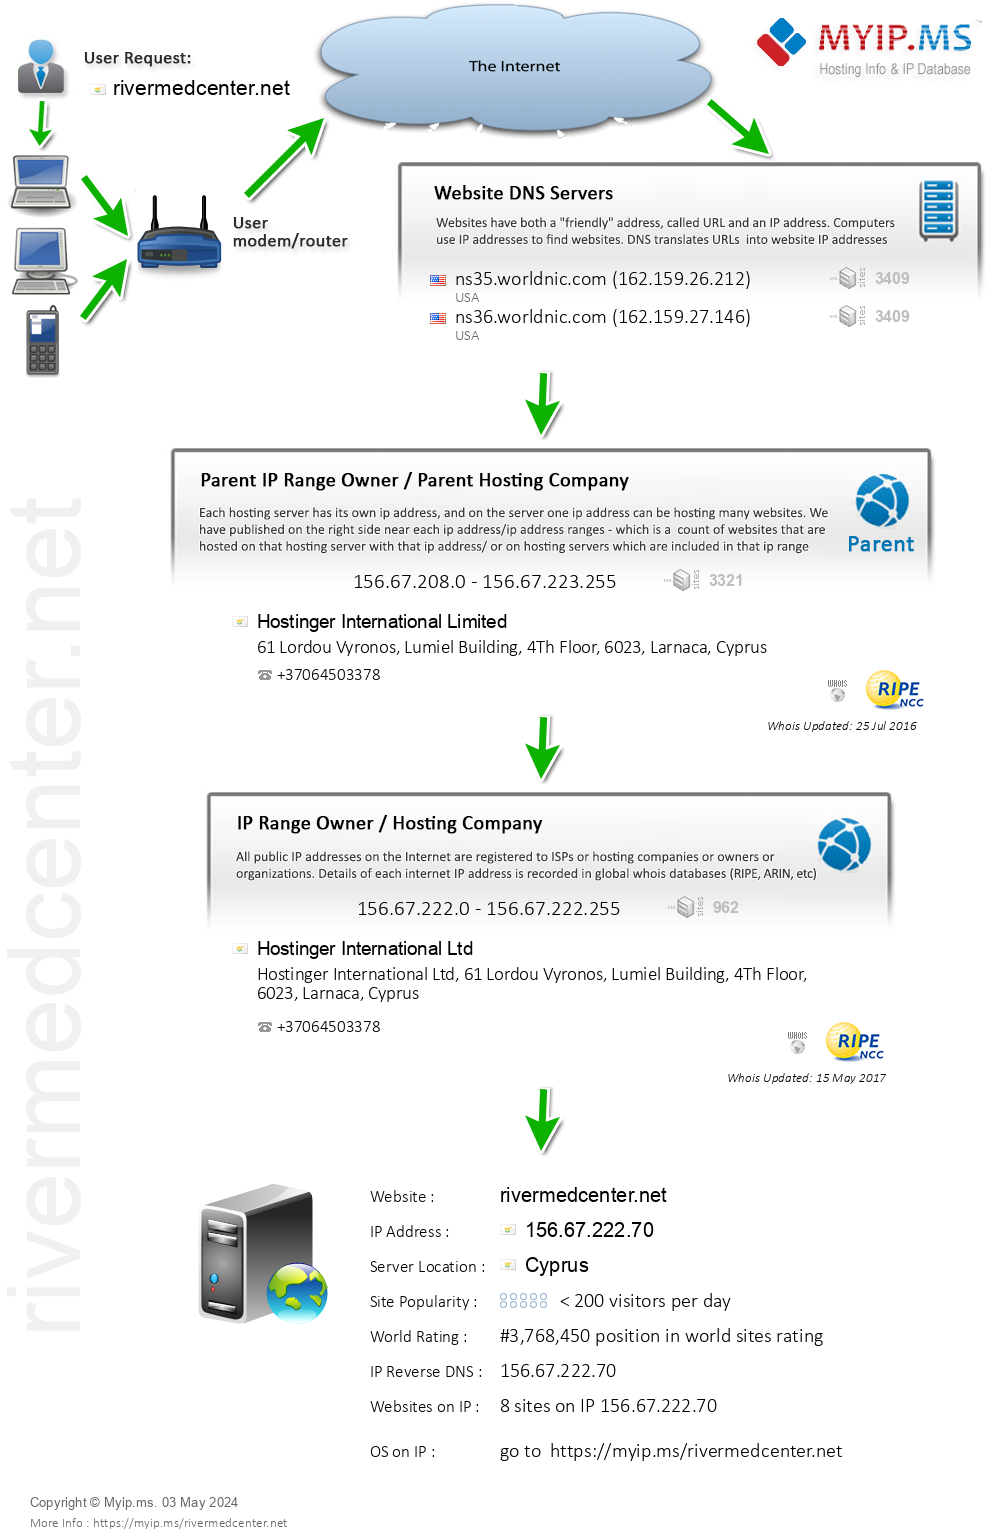 Rivermedcenter.net - Website Hosting Visual IP Diagram